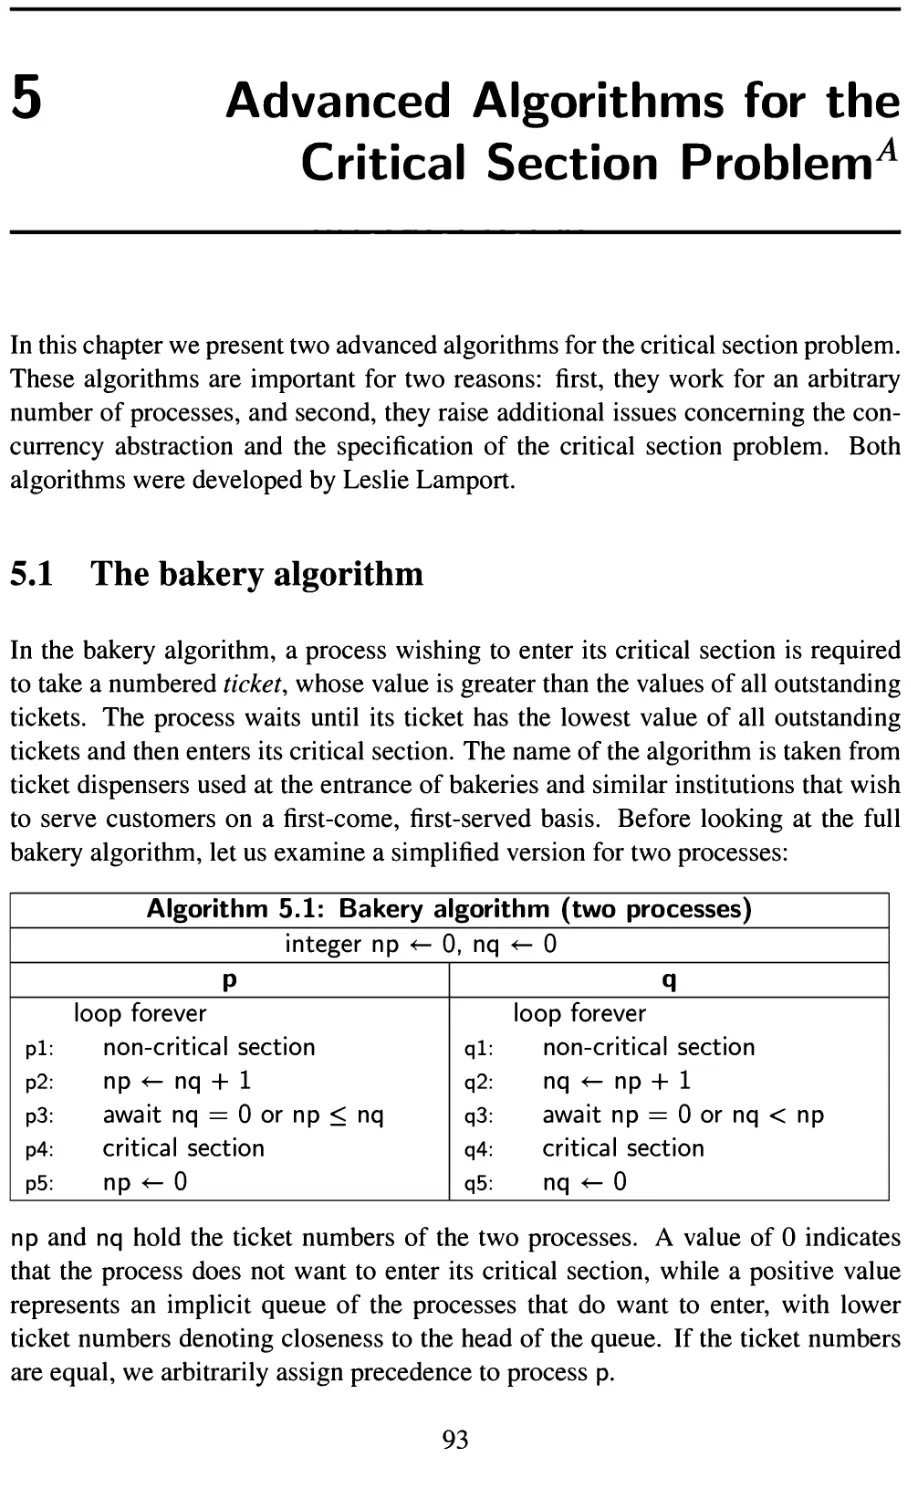 5 Advanced Algorithms for the Critical Section Problem